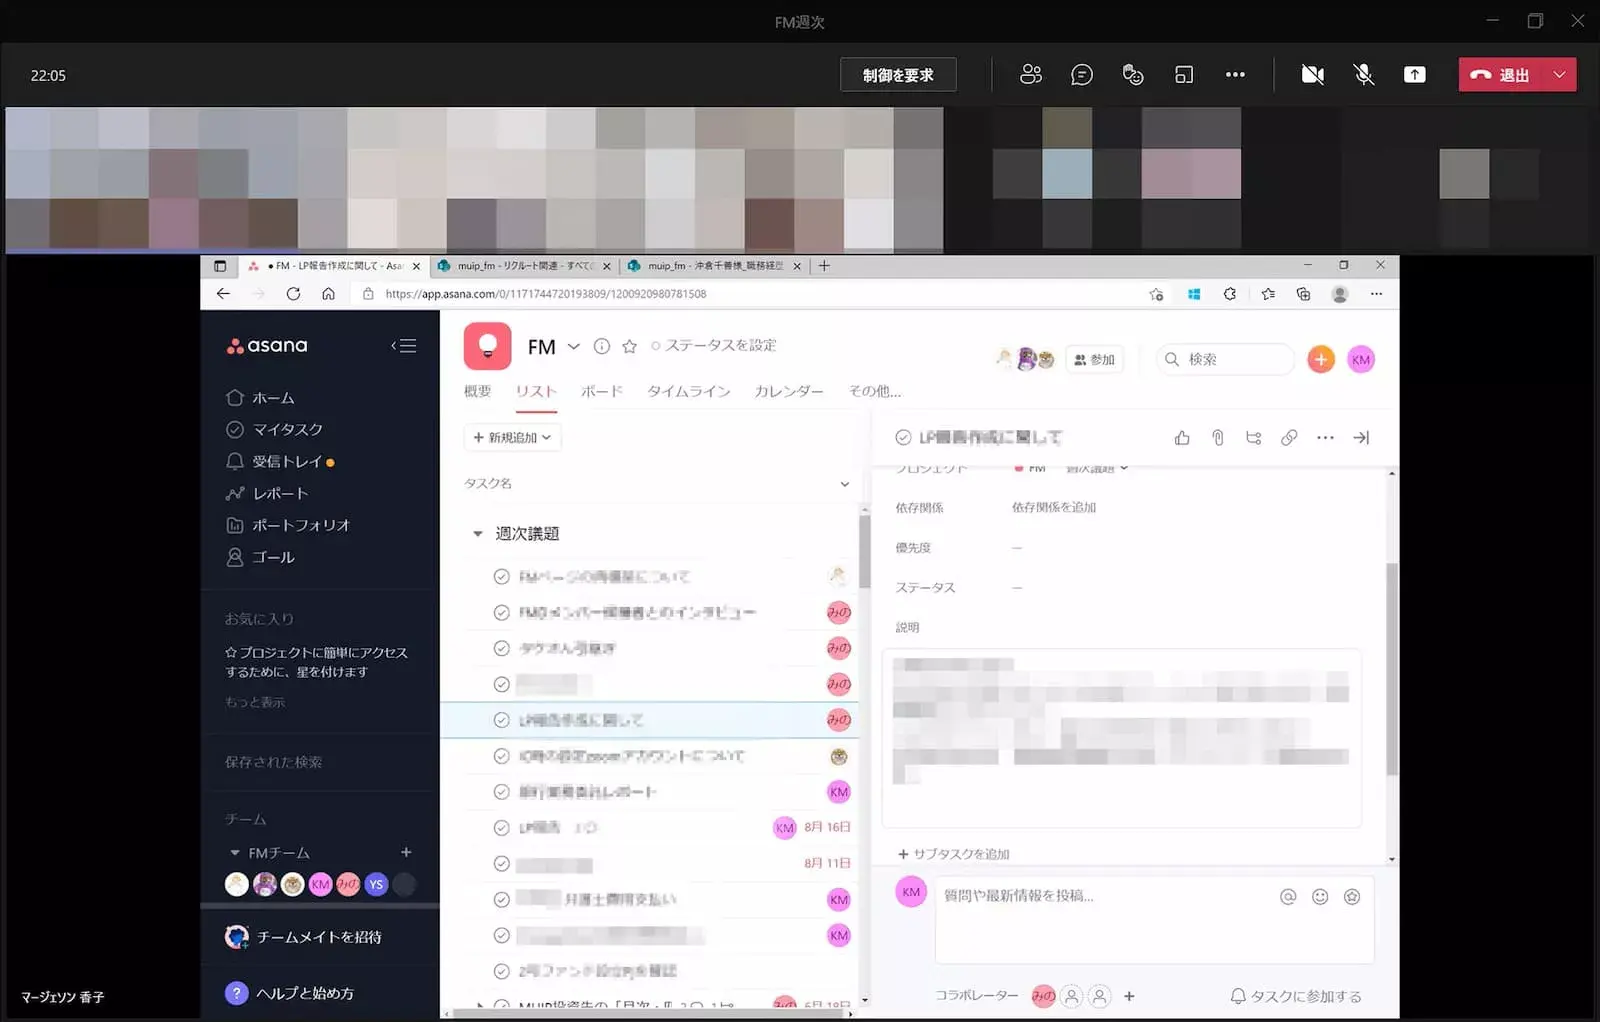 Asana Case Study - 三菱UFJイノベーション・パートナーズ - 実際のAsana画面